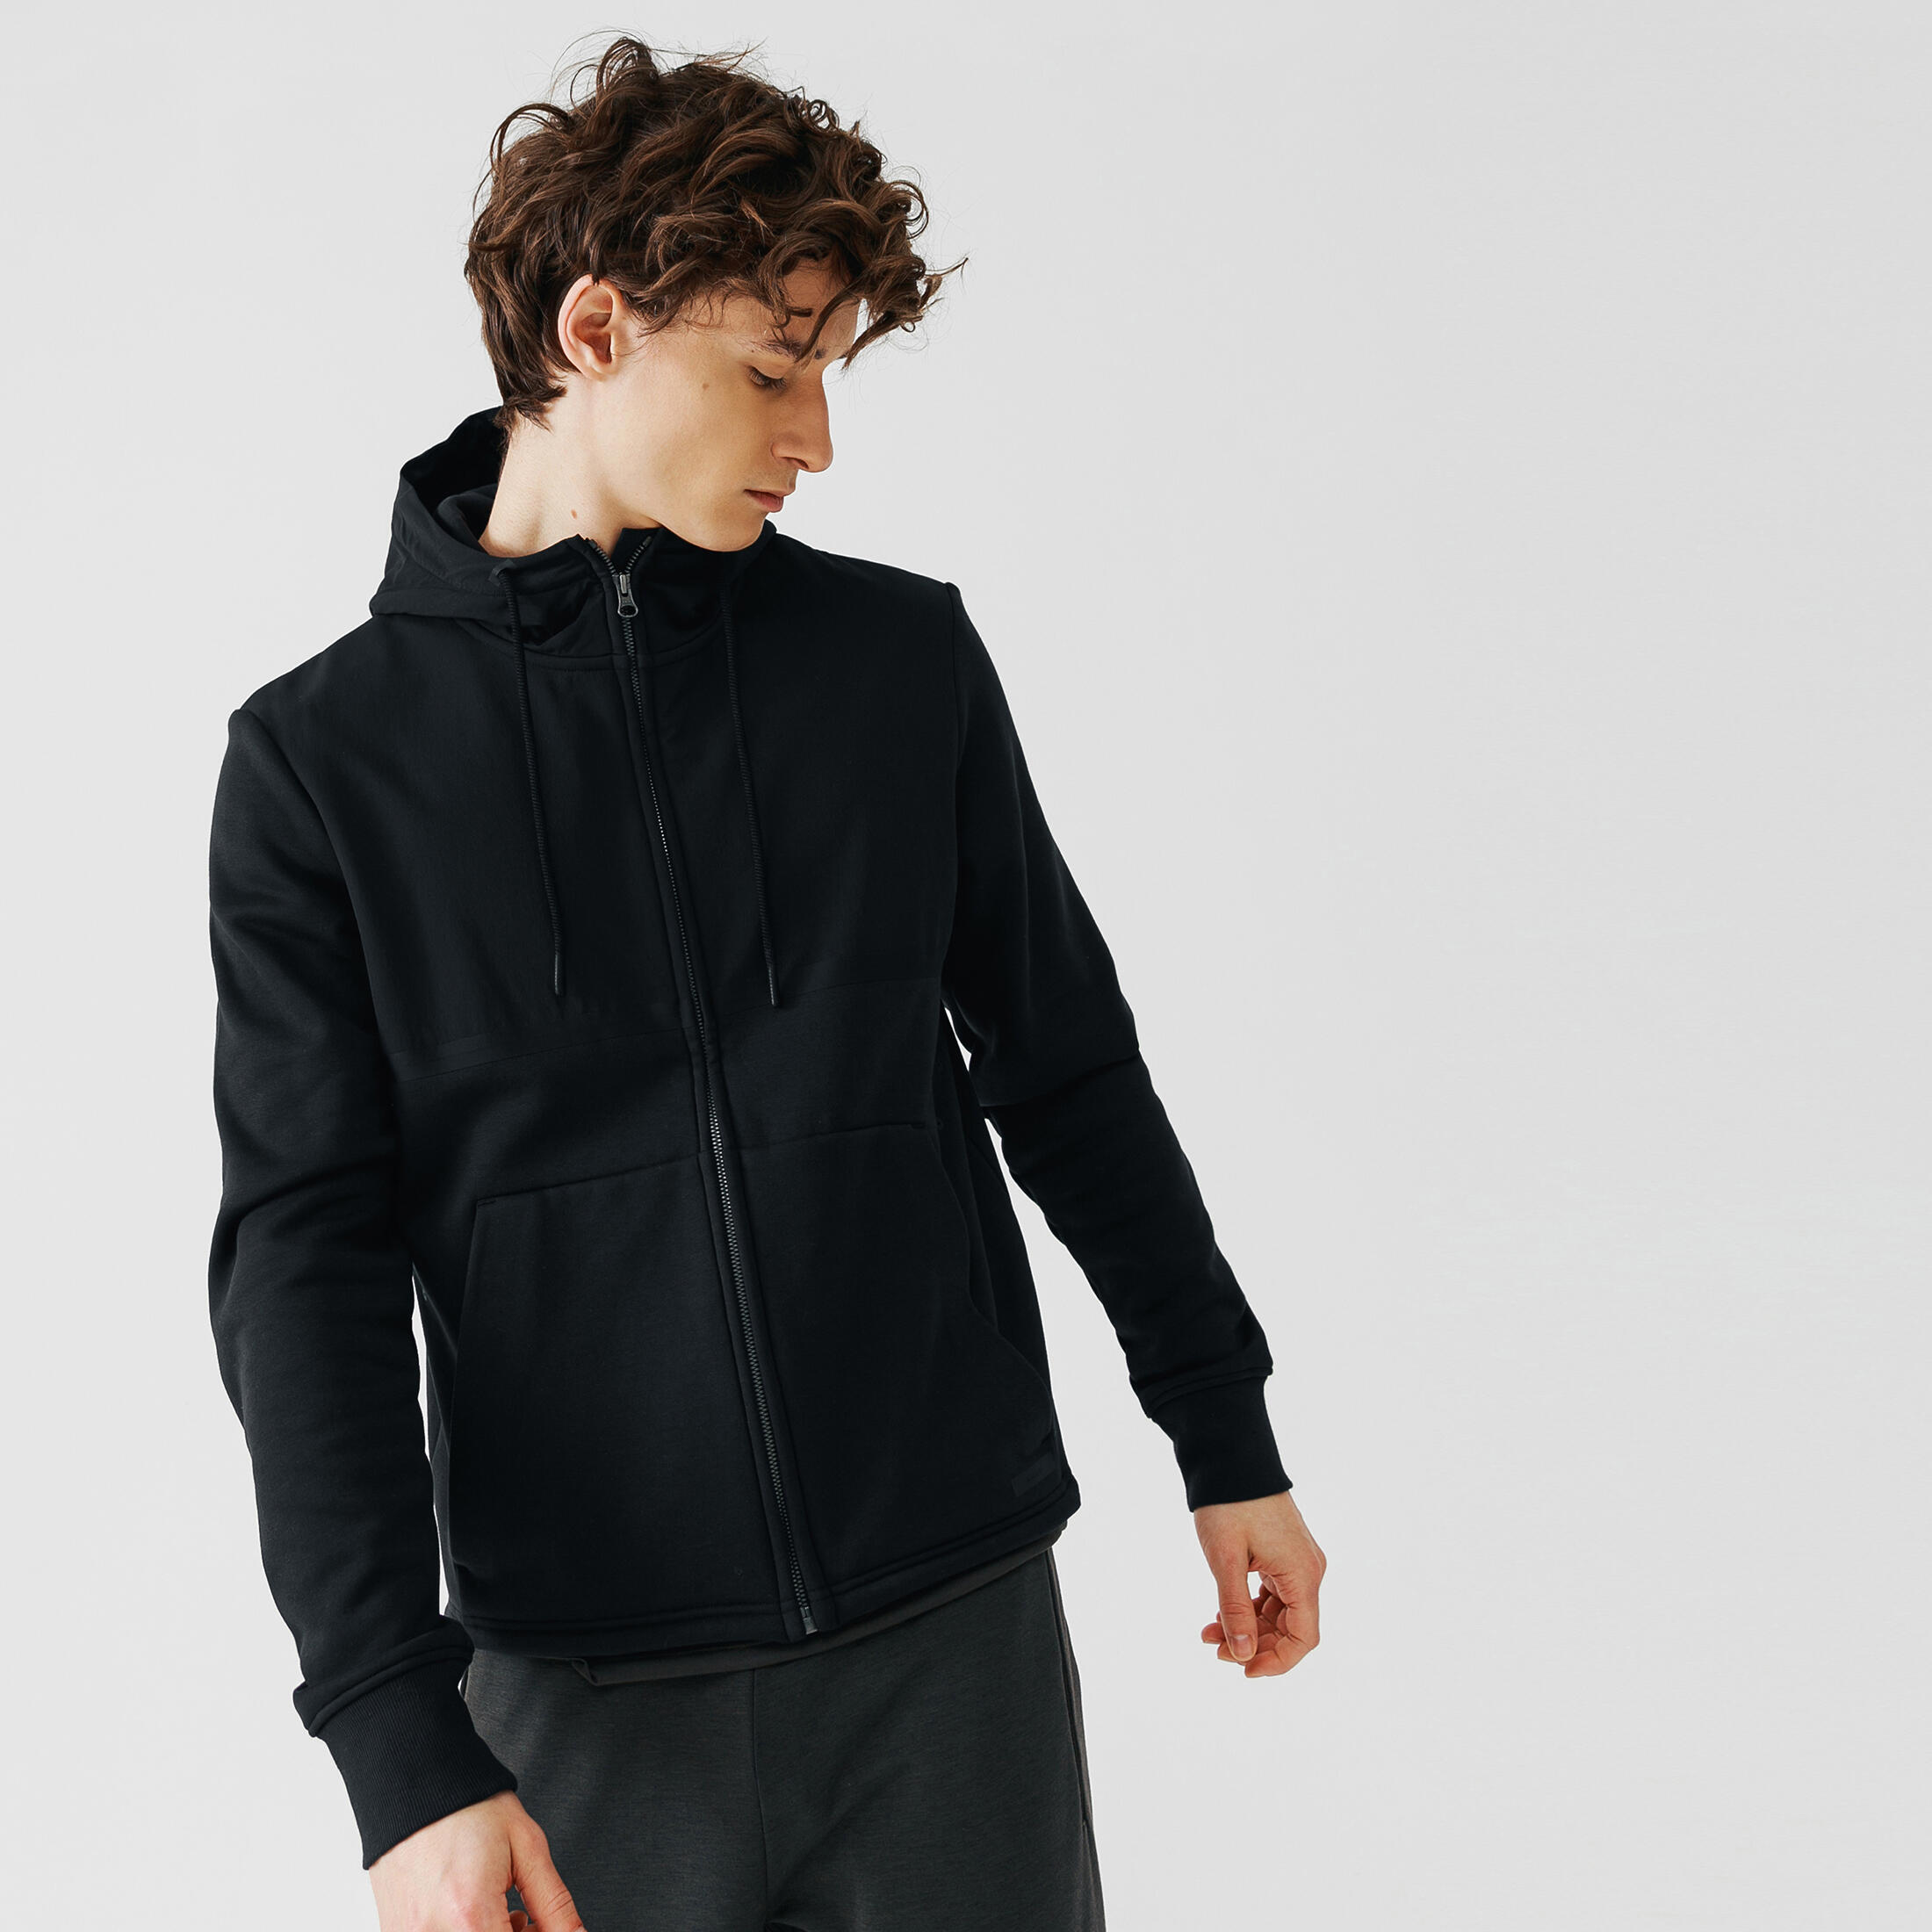 KALENJI Men's hooded running jacket - Warm+ - Black